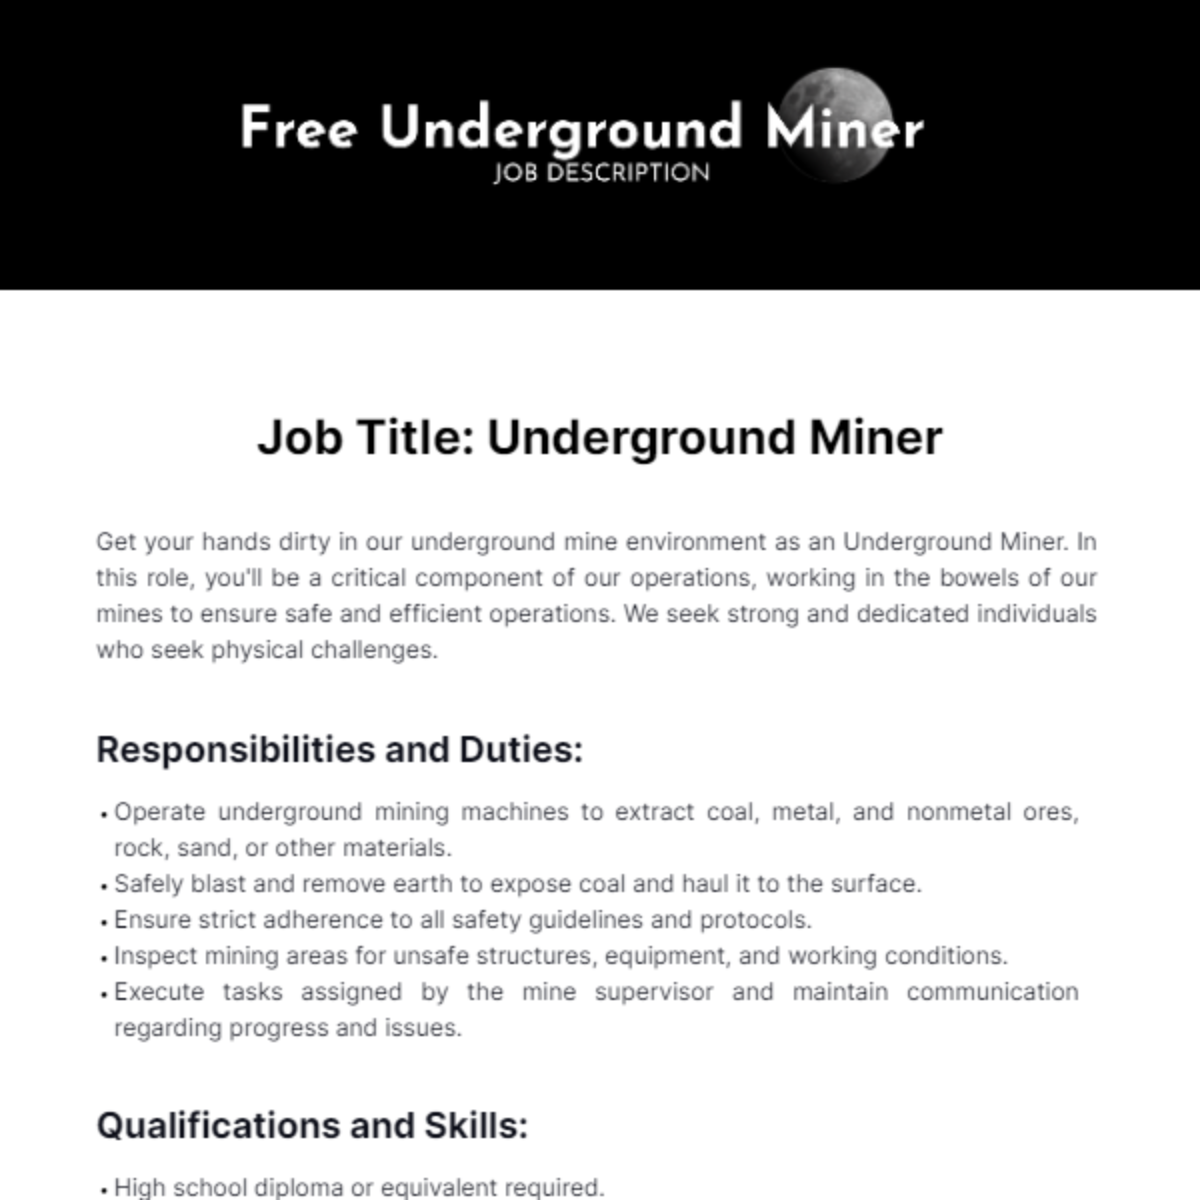 Free Underground Miner Job Description Template